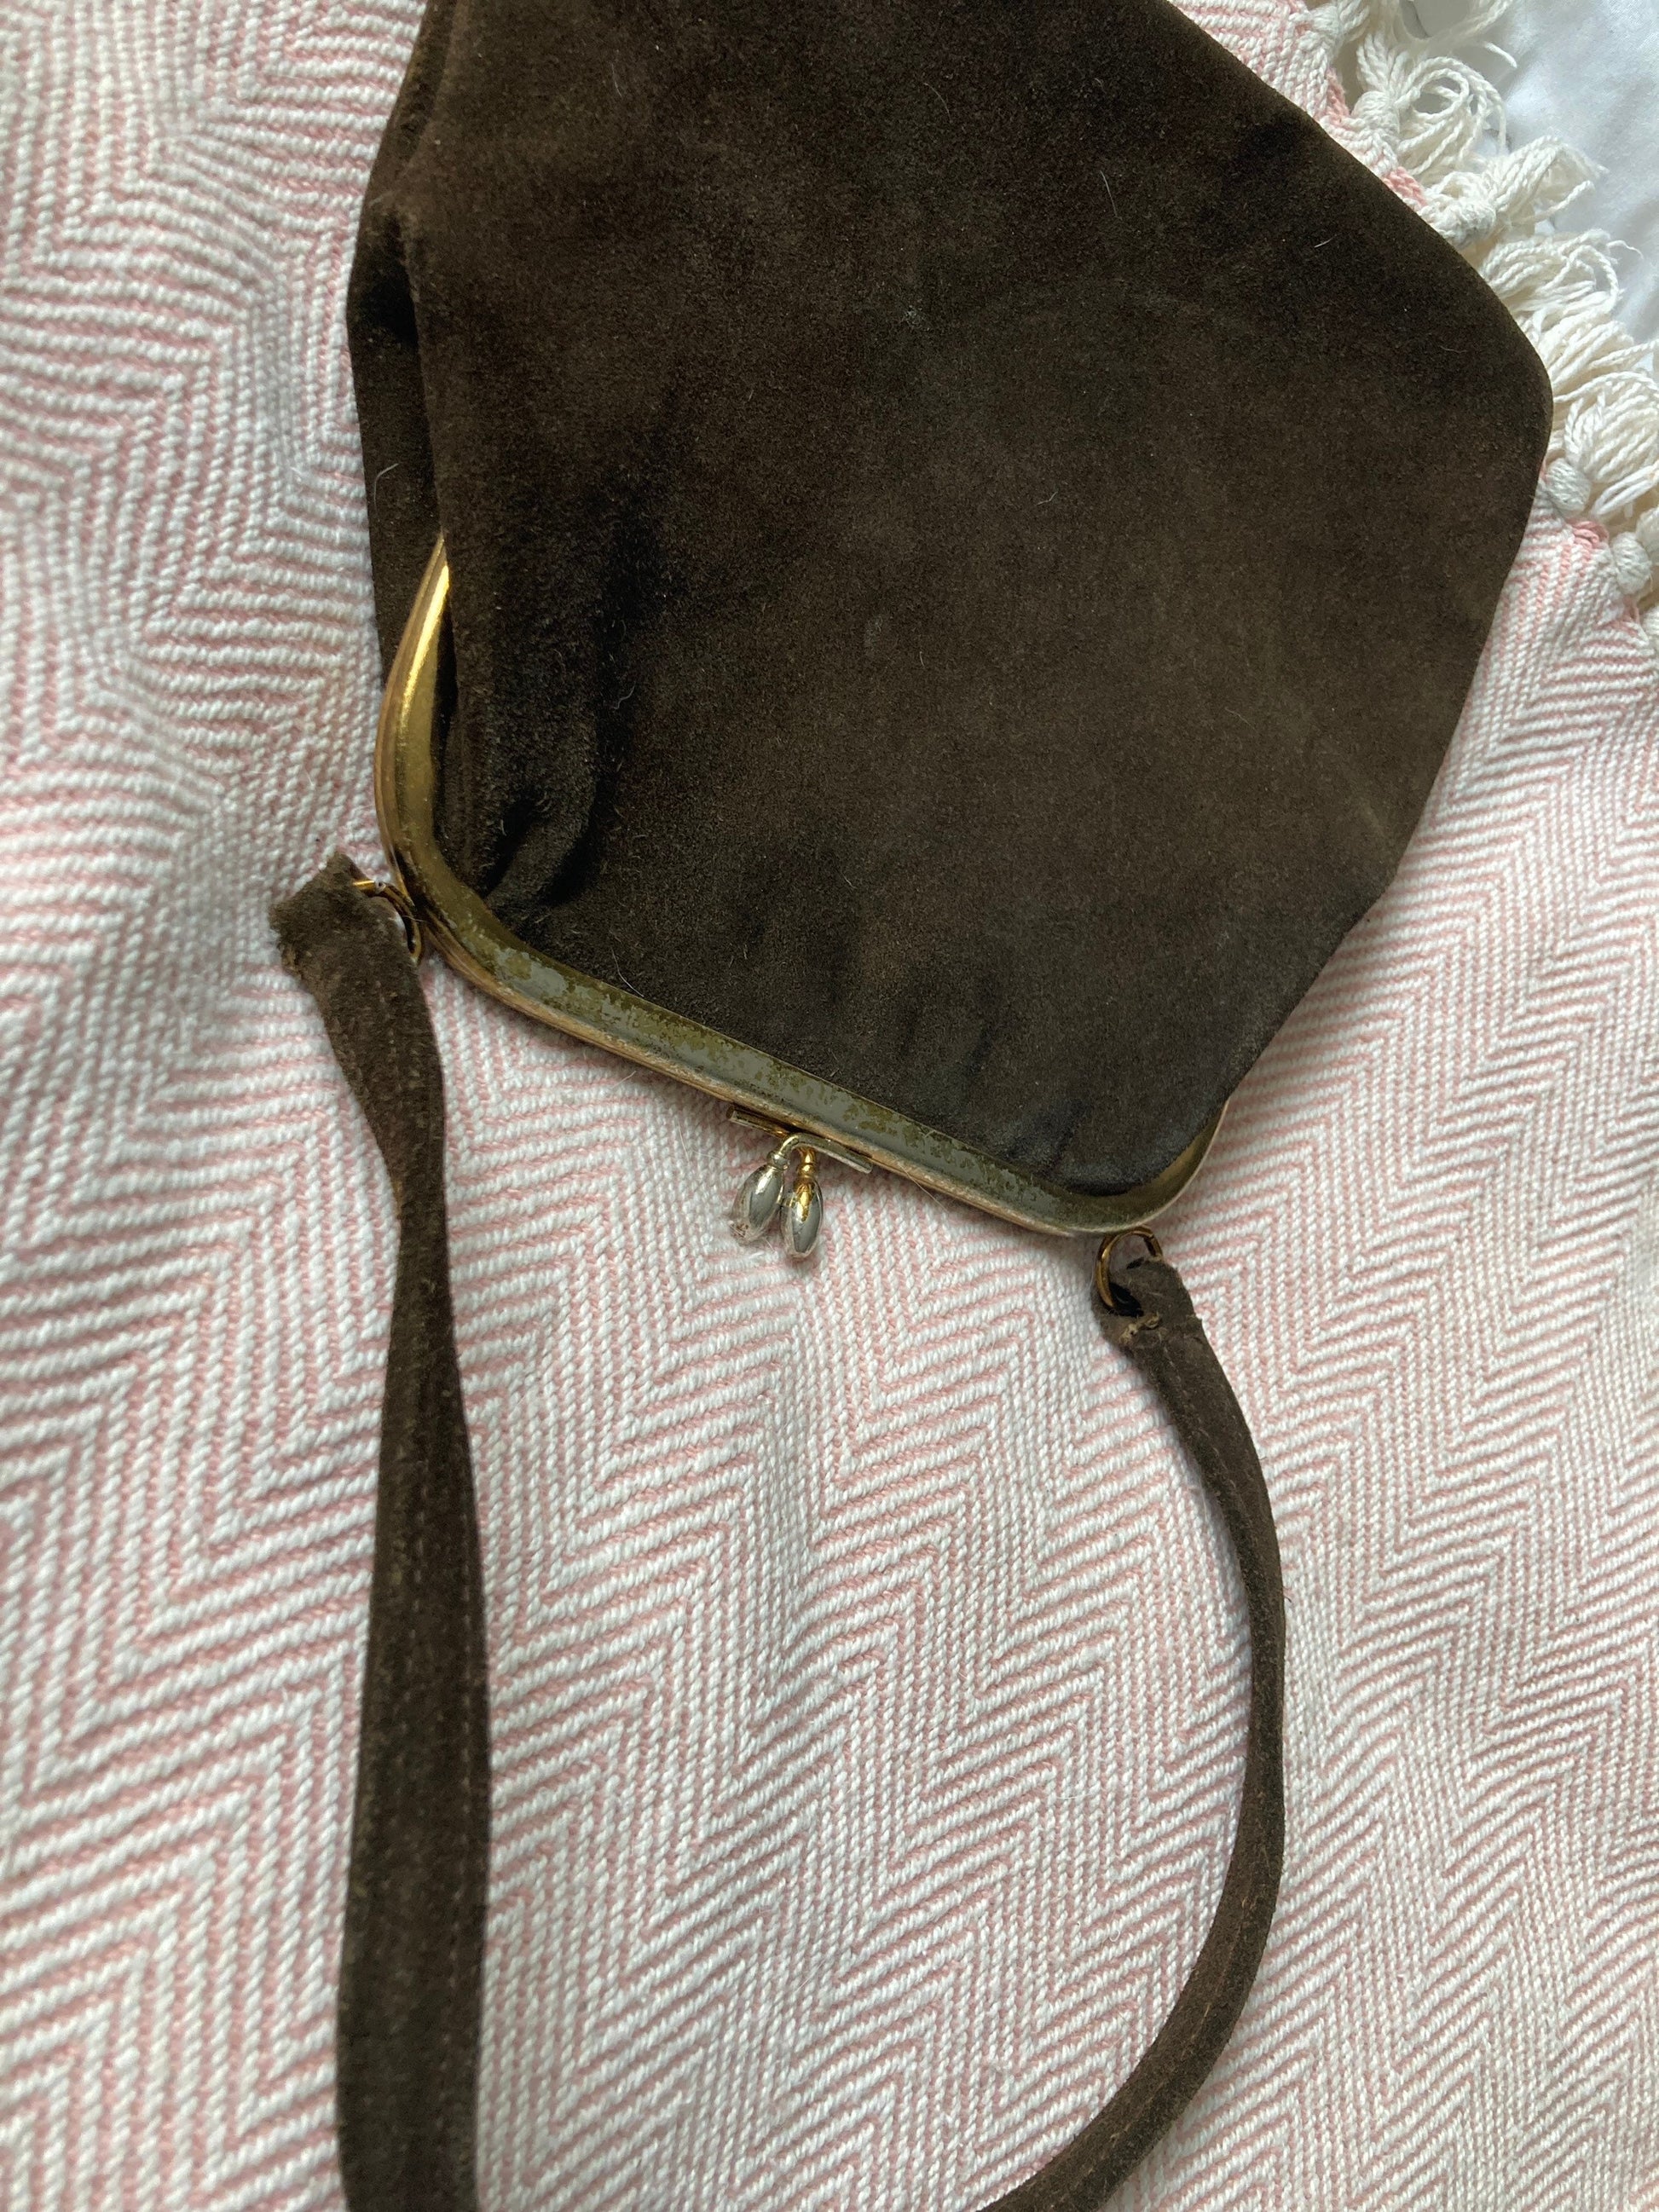 Antique Vintage 1930s to 1950s brown suede leather deep Evening Purse day Bag Handbag